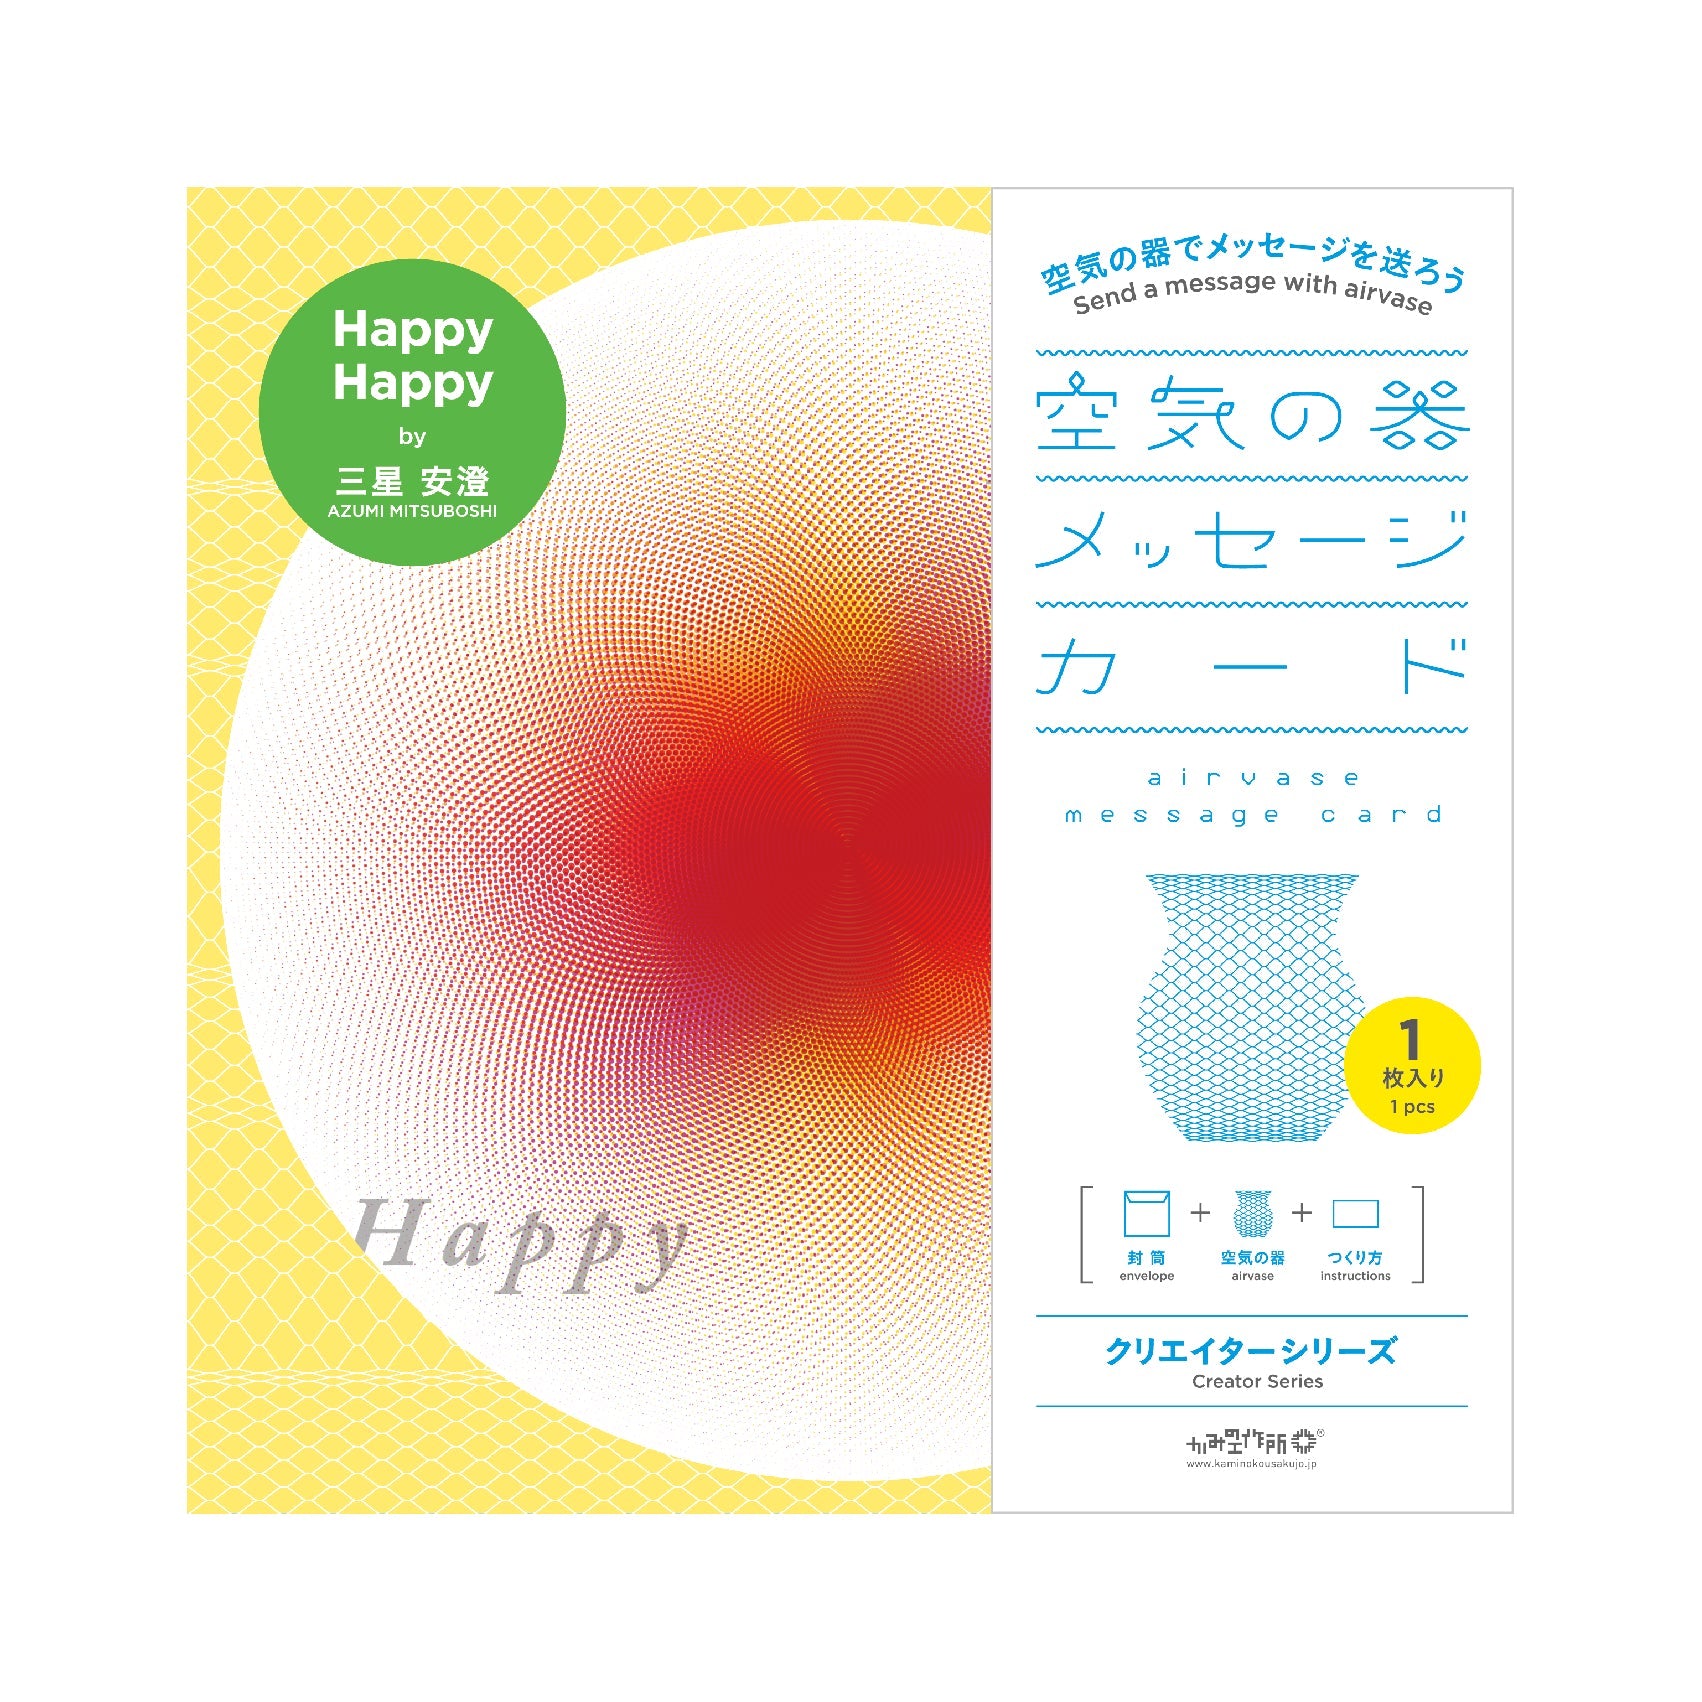 airvase Message Card Creator Series by Azumi Mitsuboshi